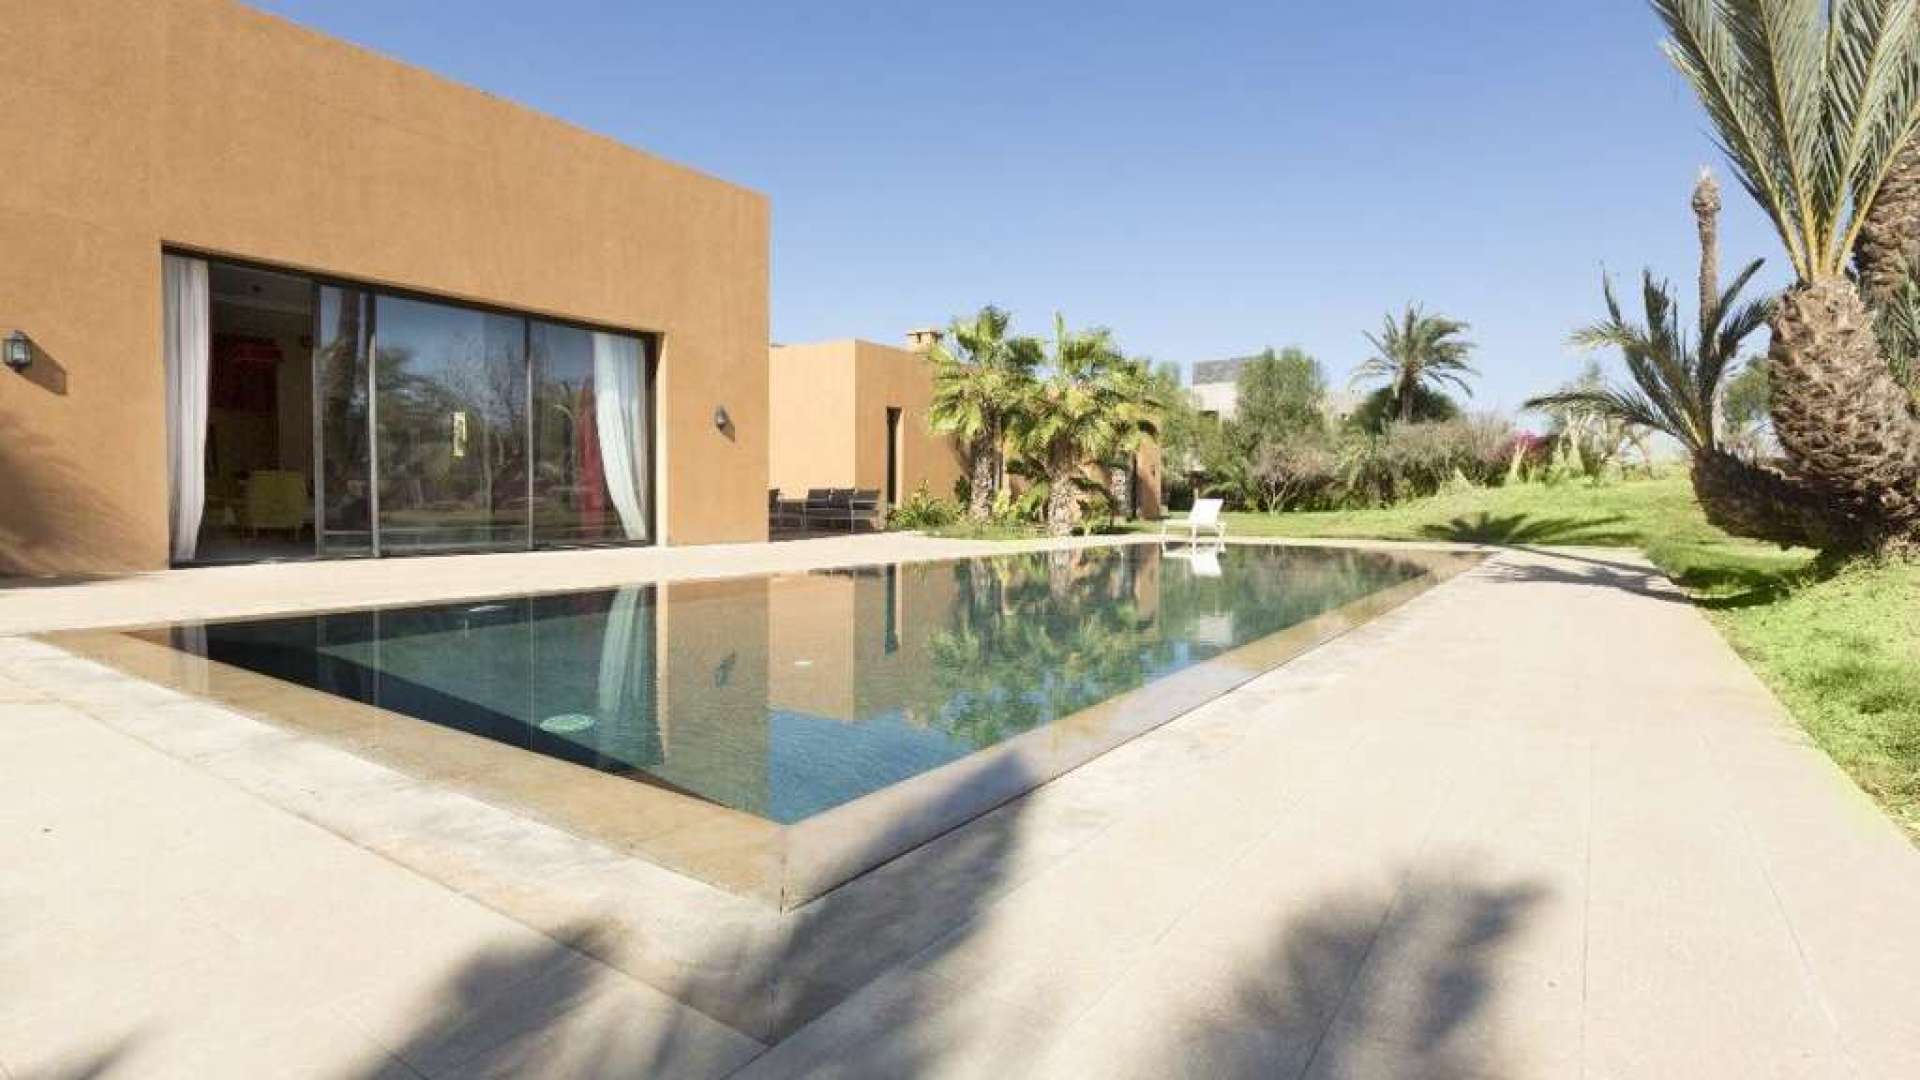 Location de vacances,Villa,Location de vacances Villa de luxe dans la palmeraie de Marrakech avec jardin et piscine,Marrakech,Palmeraie